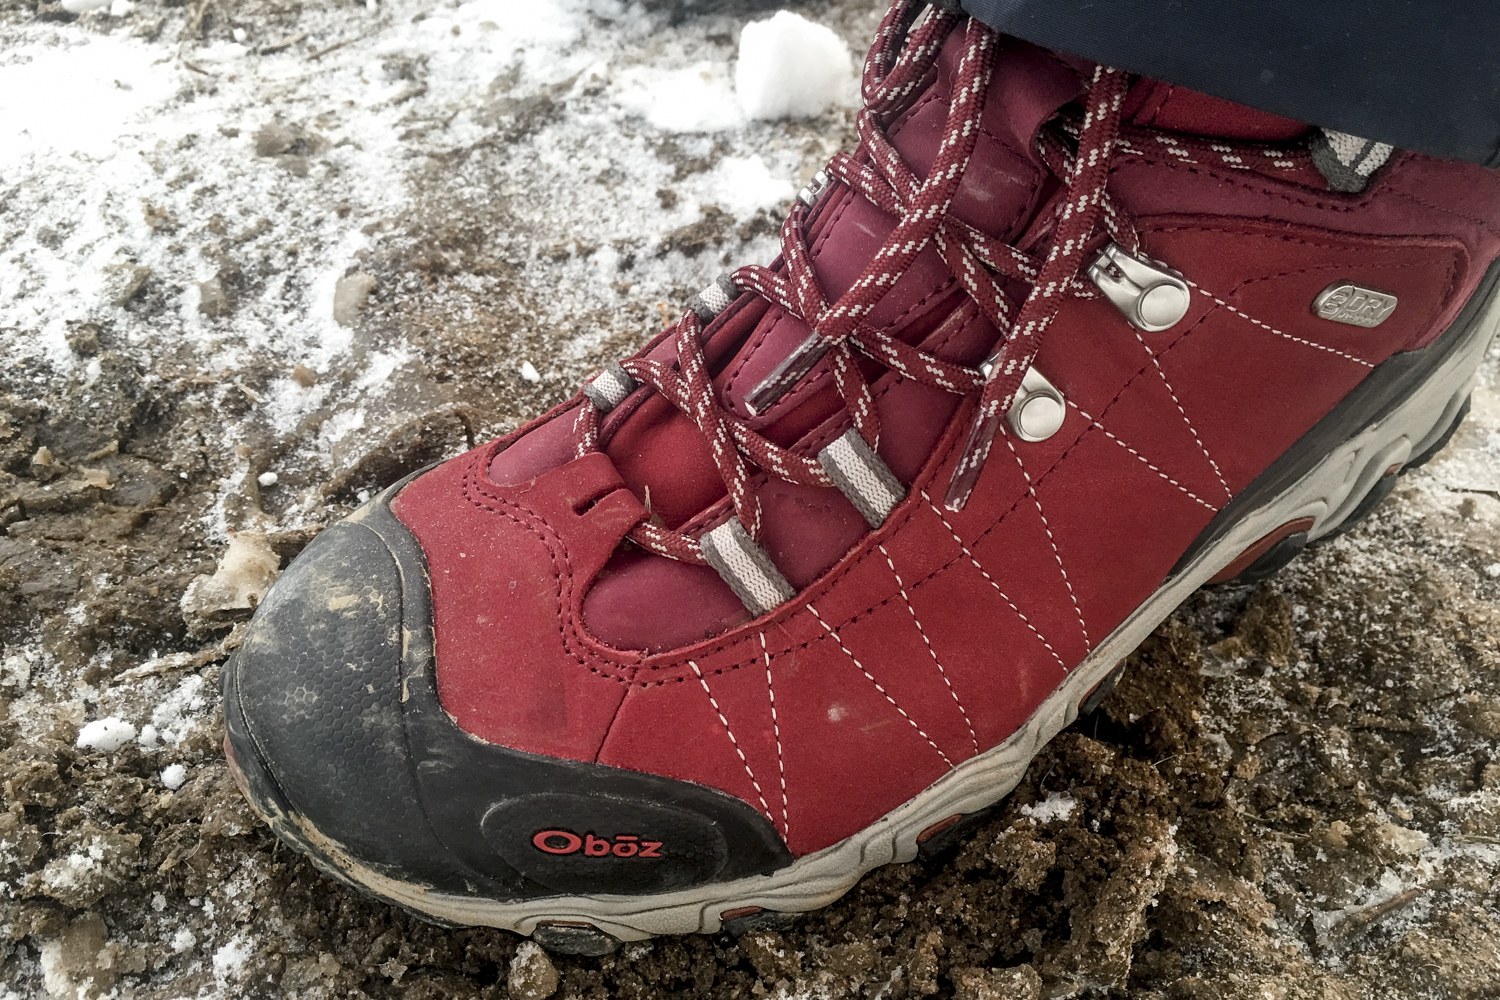 oboz bridger bdry hiking boot hands on review obozbridgerbdry handson 406